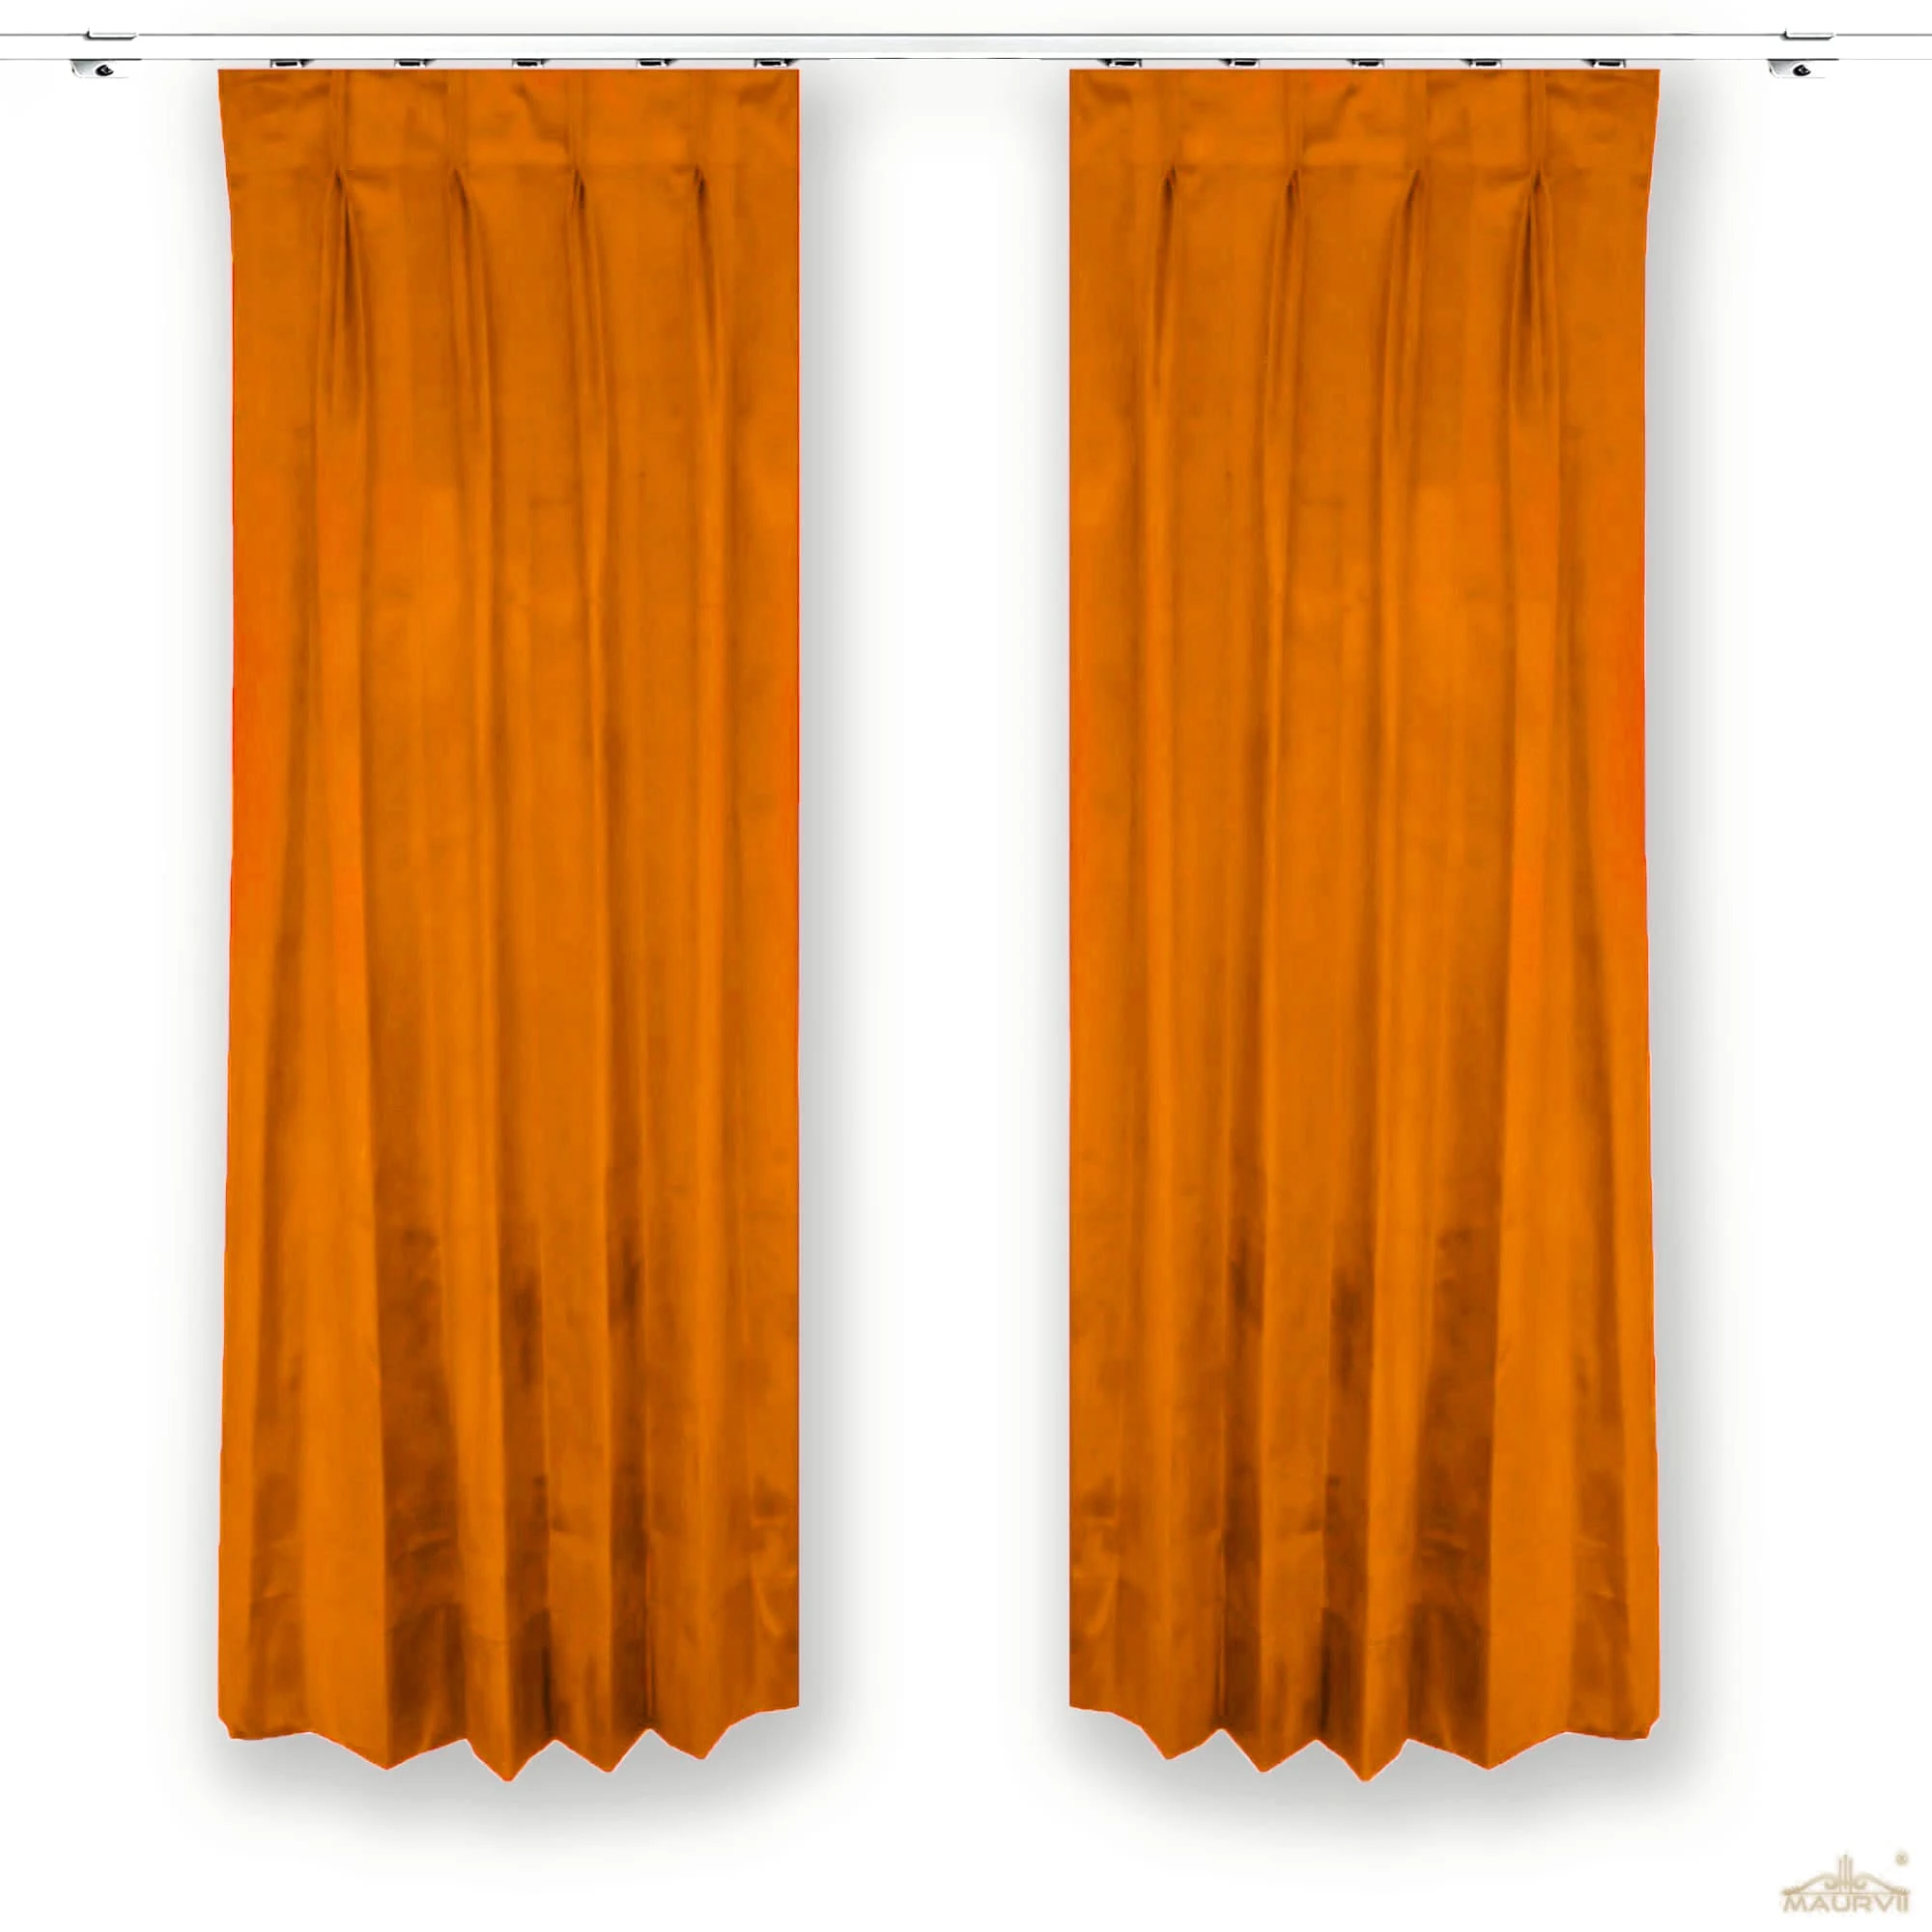 Orange room curtains